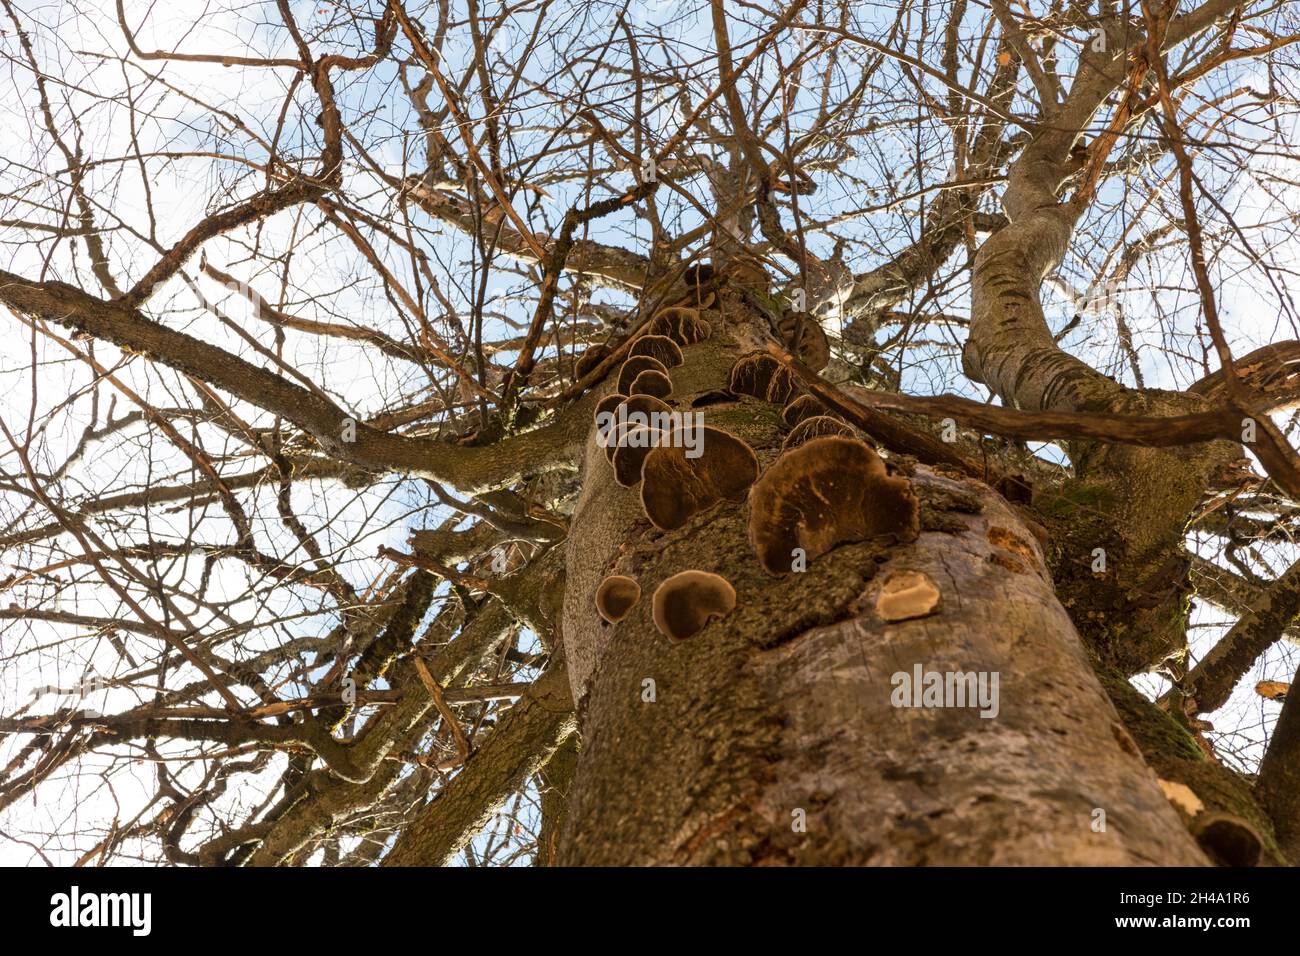 Baumpilze, Tree mushrooms Stock Photo